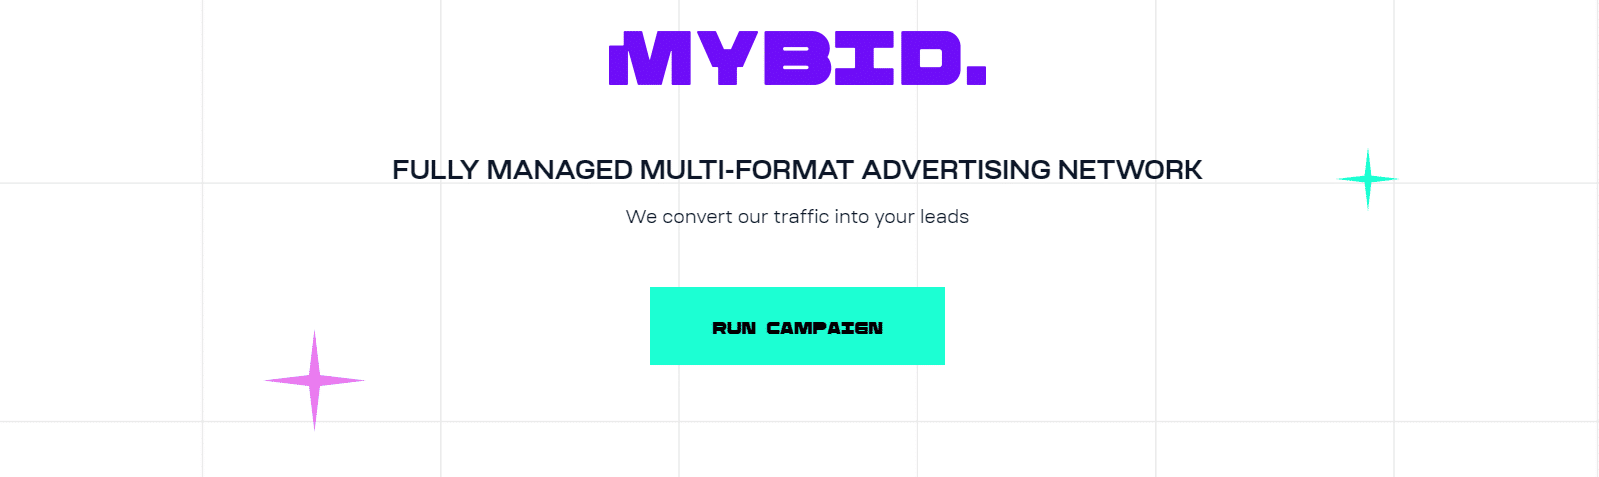 mybid fully managed advertising network